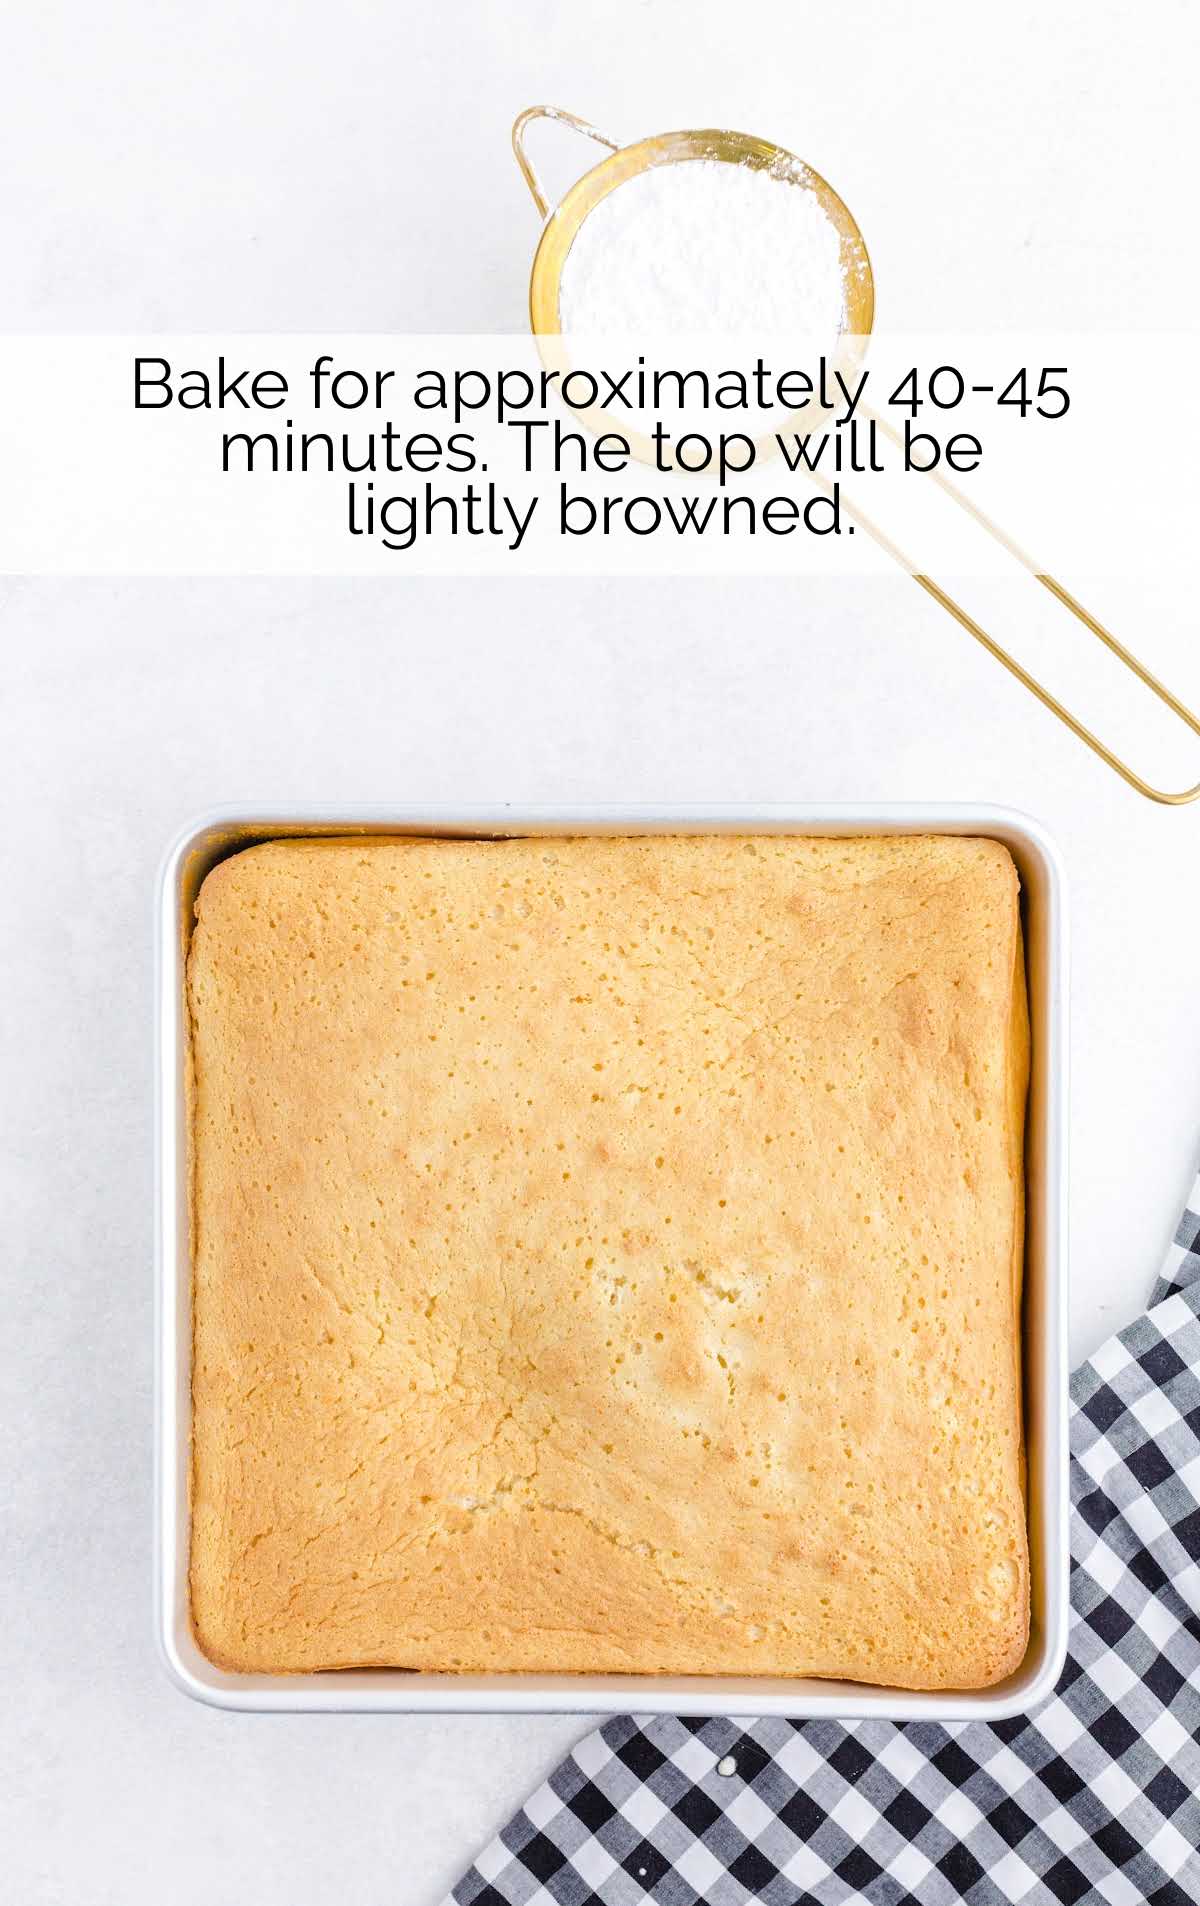 cake baked in a baking pan